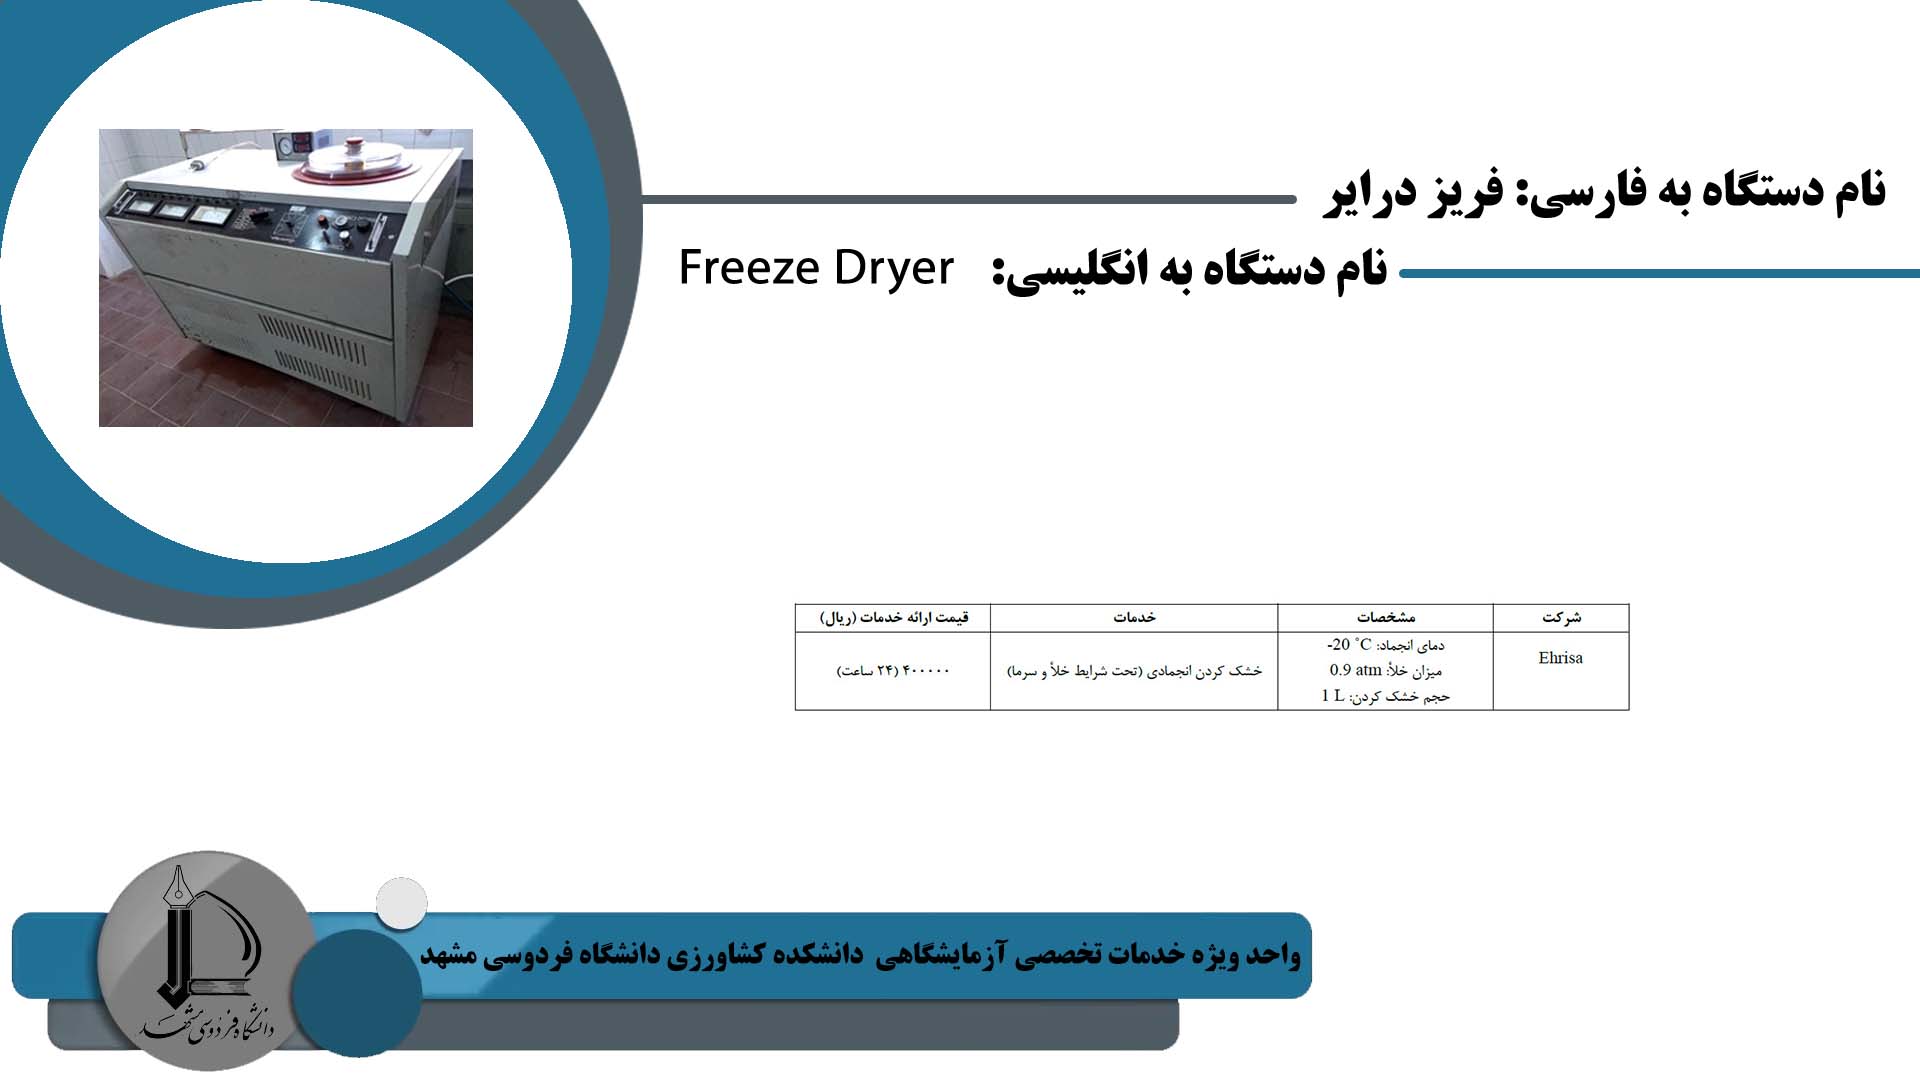 Freeze Dryer